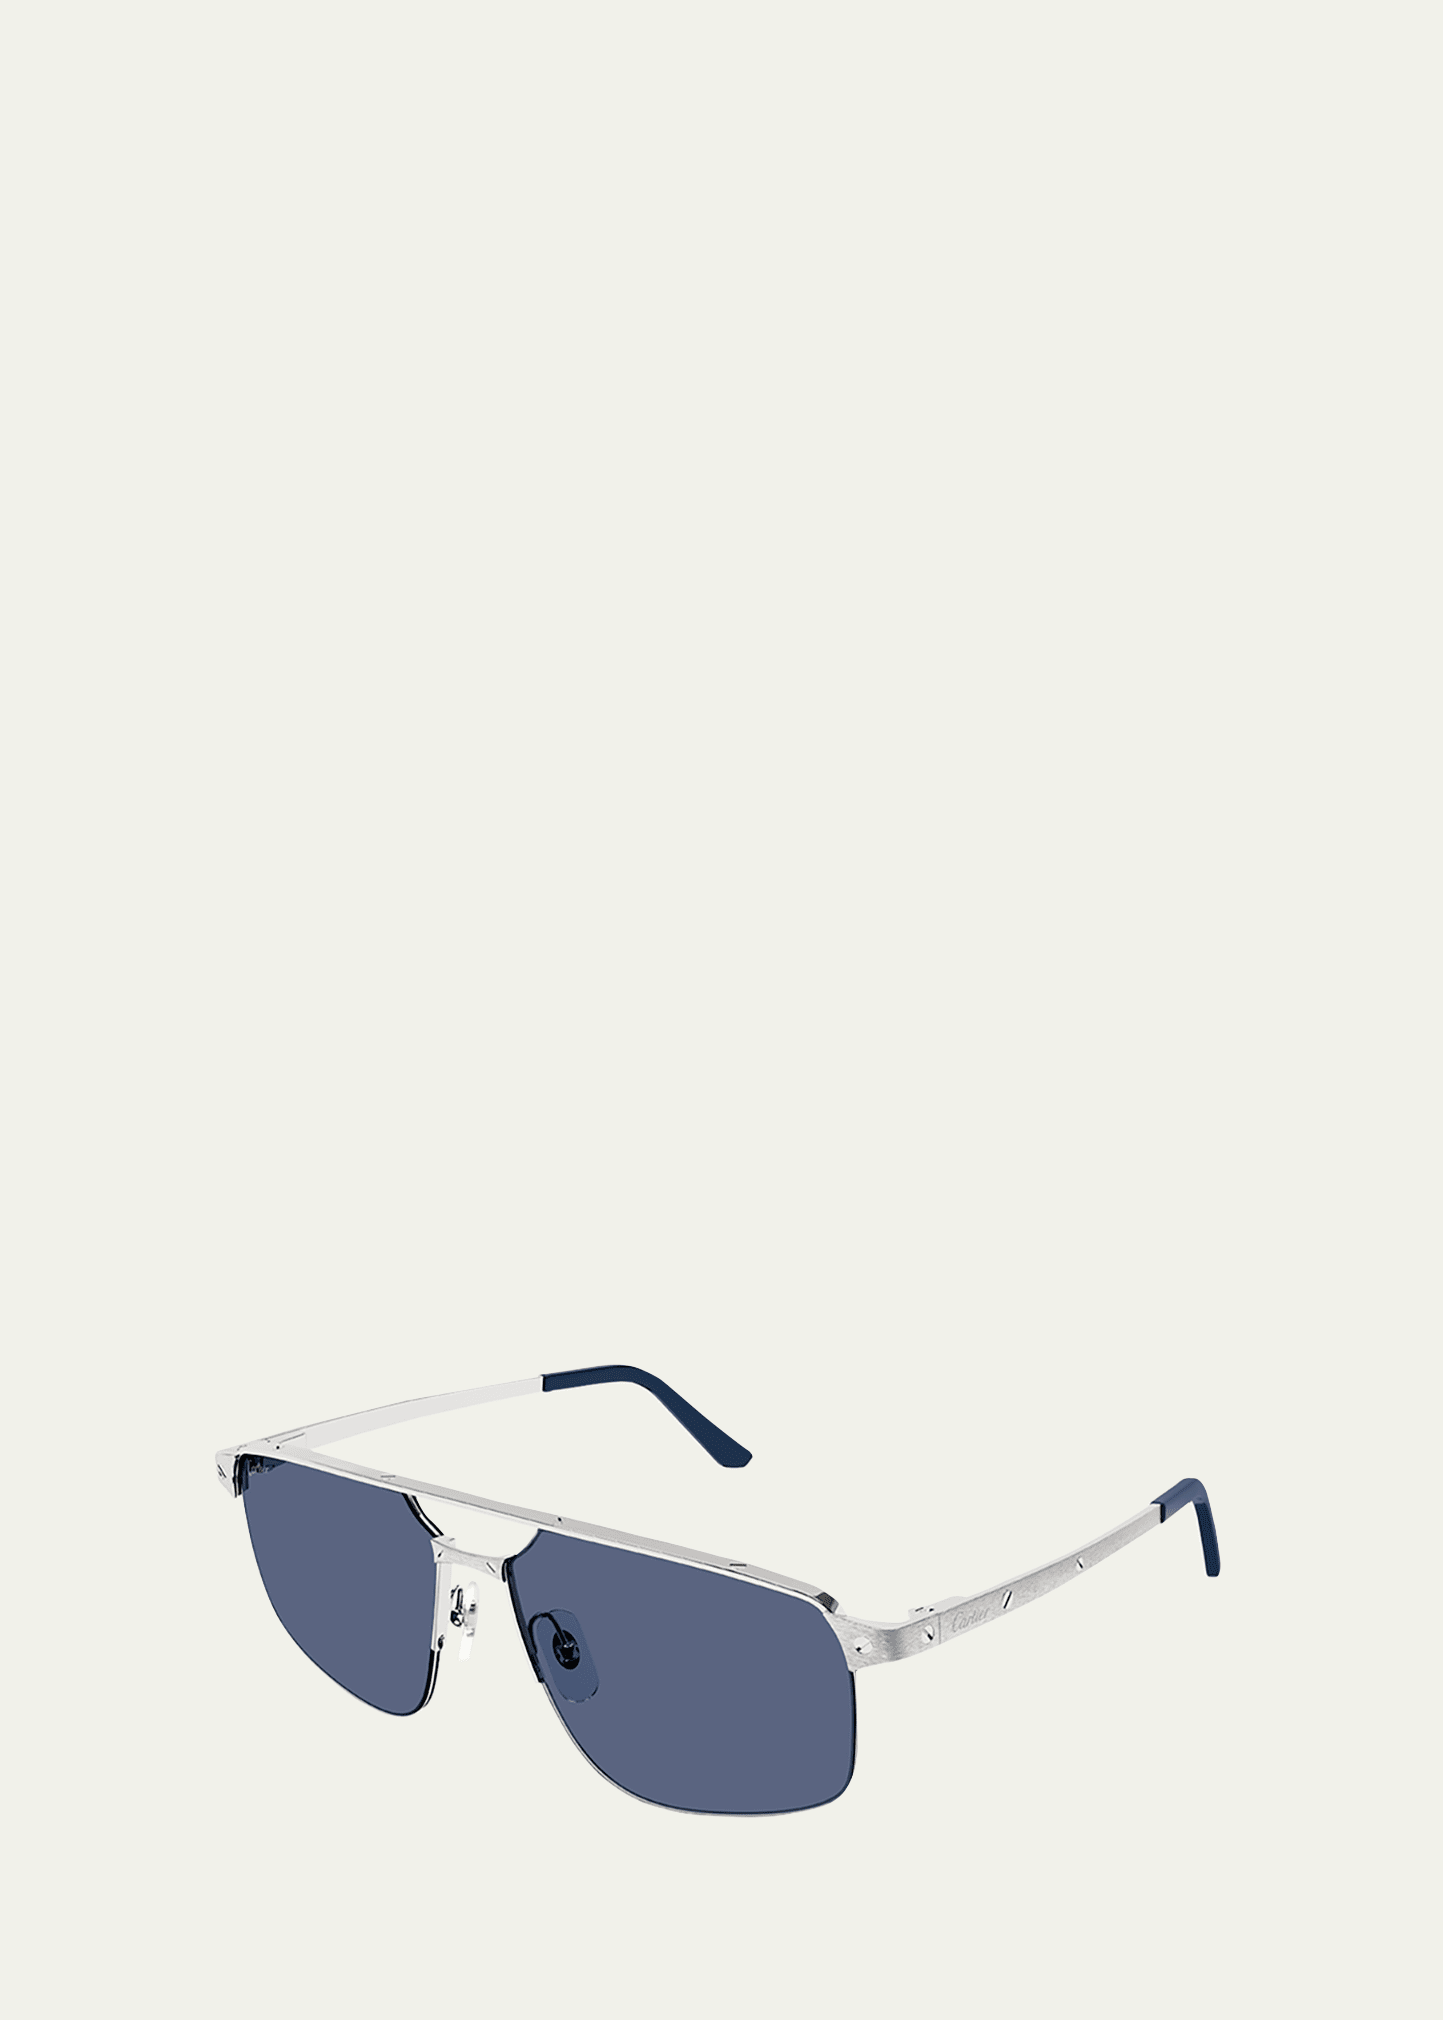 Cartier Men's Santos Evolution 60mm Platinum-plated Navigator Sunglasses In Silver/blue Solid